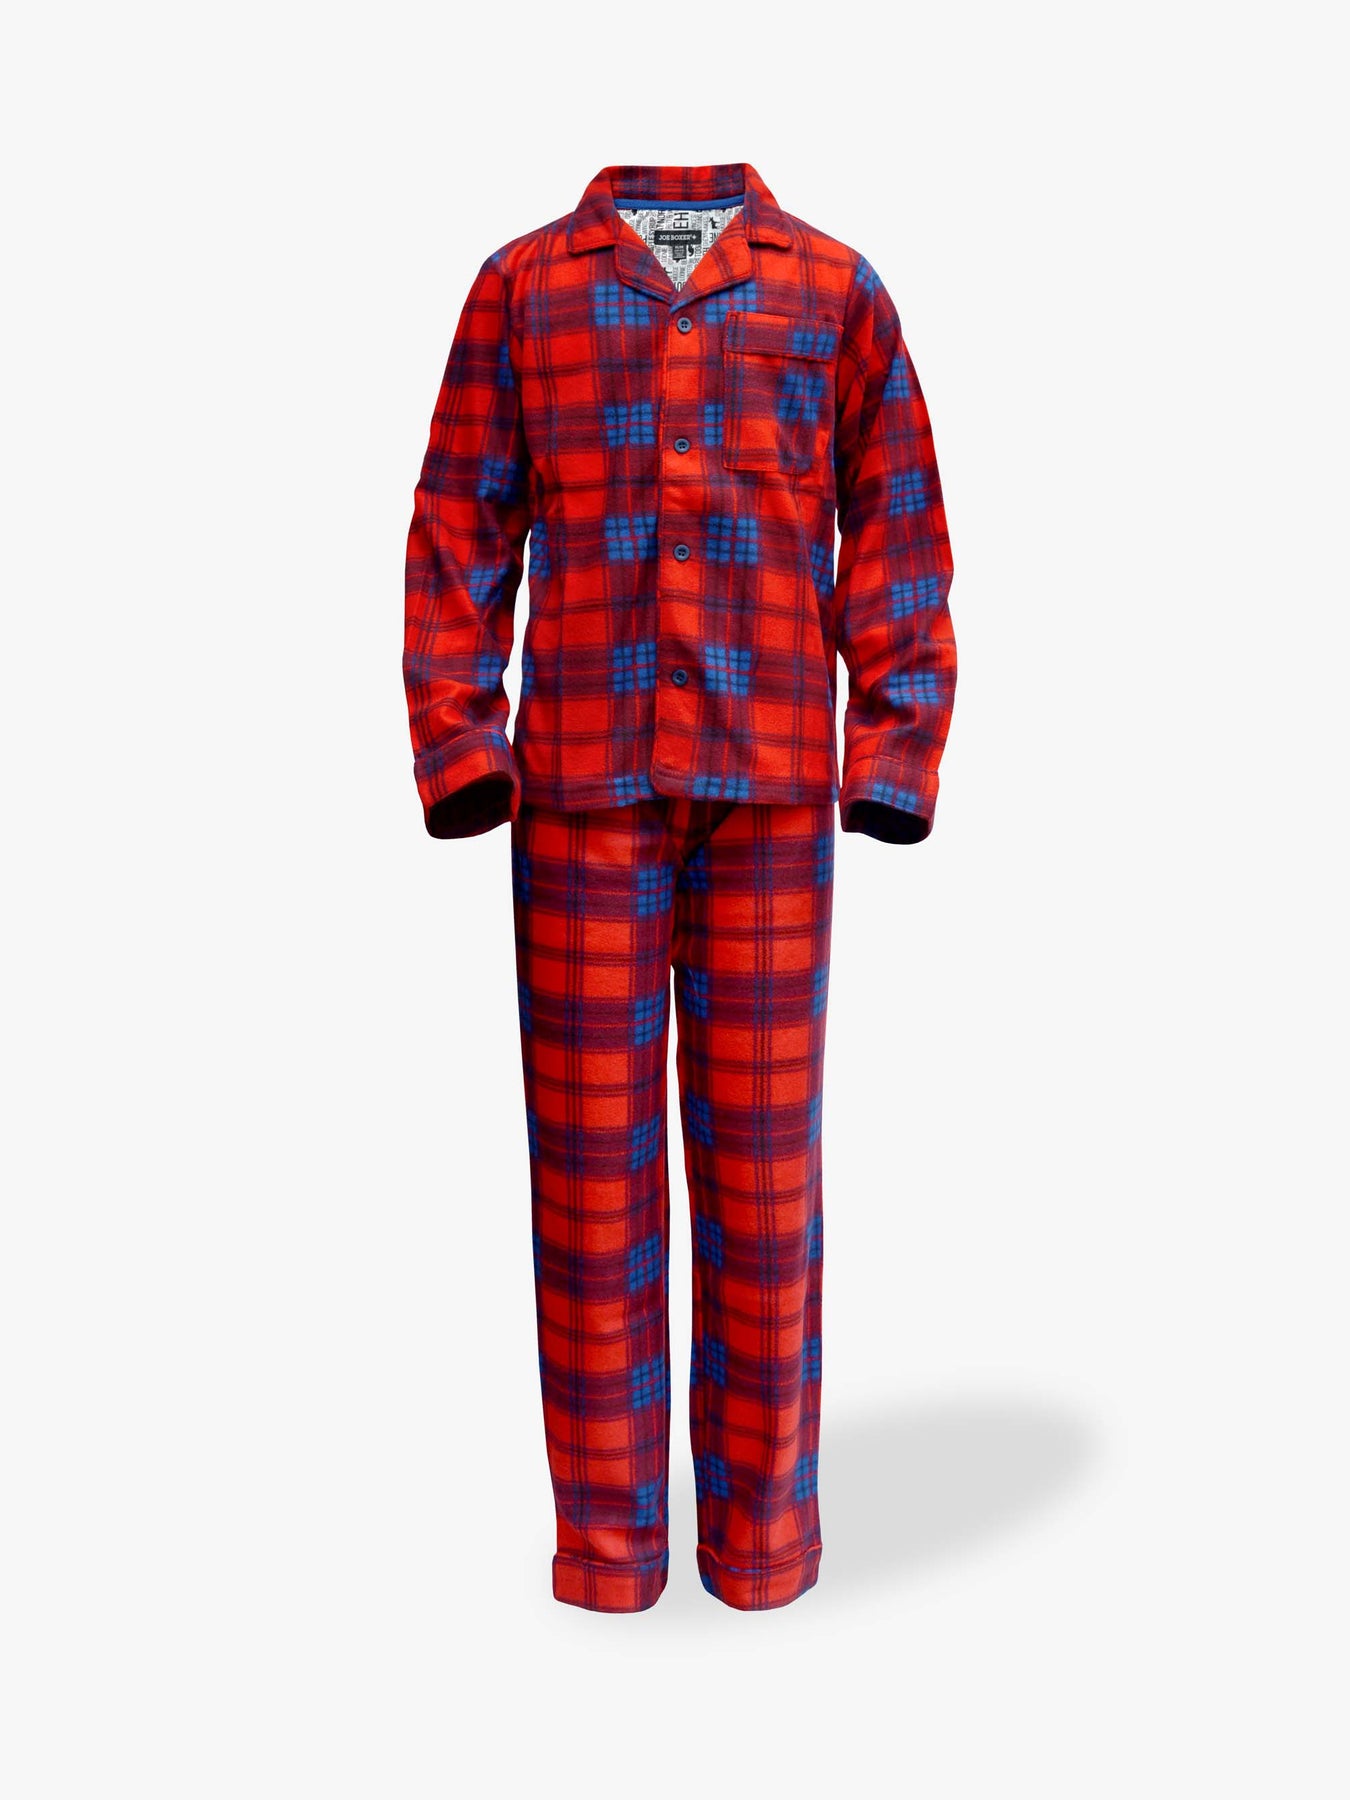 Boys' Pajama Pants - 2 Pack Fleece Sleepwear Jogger Bottoms (Size: S-L),  Size Large, Poppy/Red/Blue Camo 